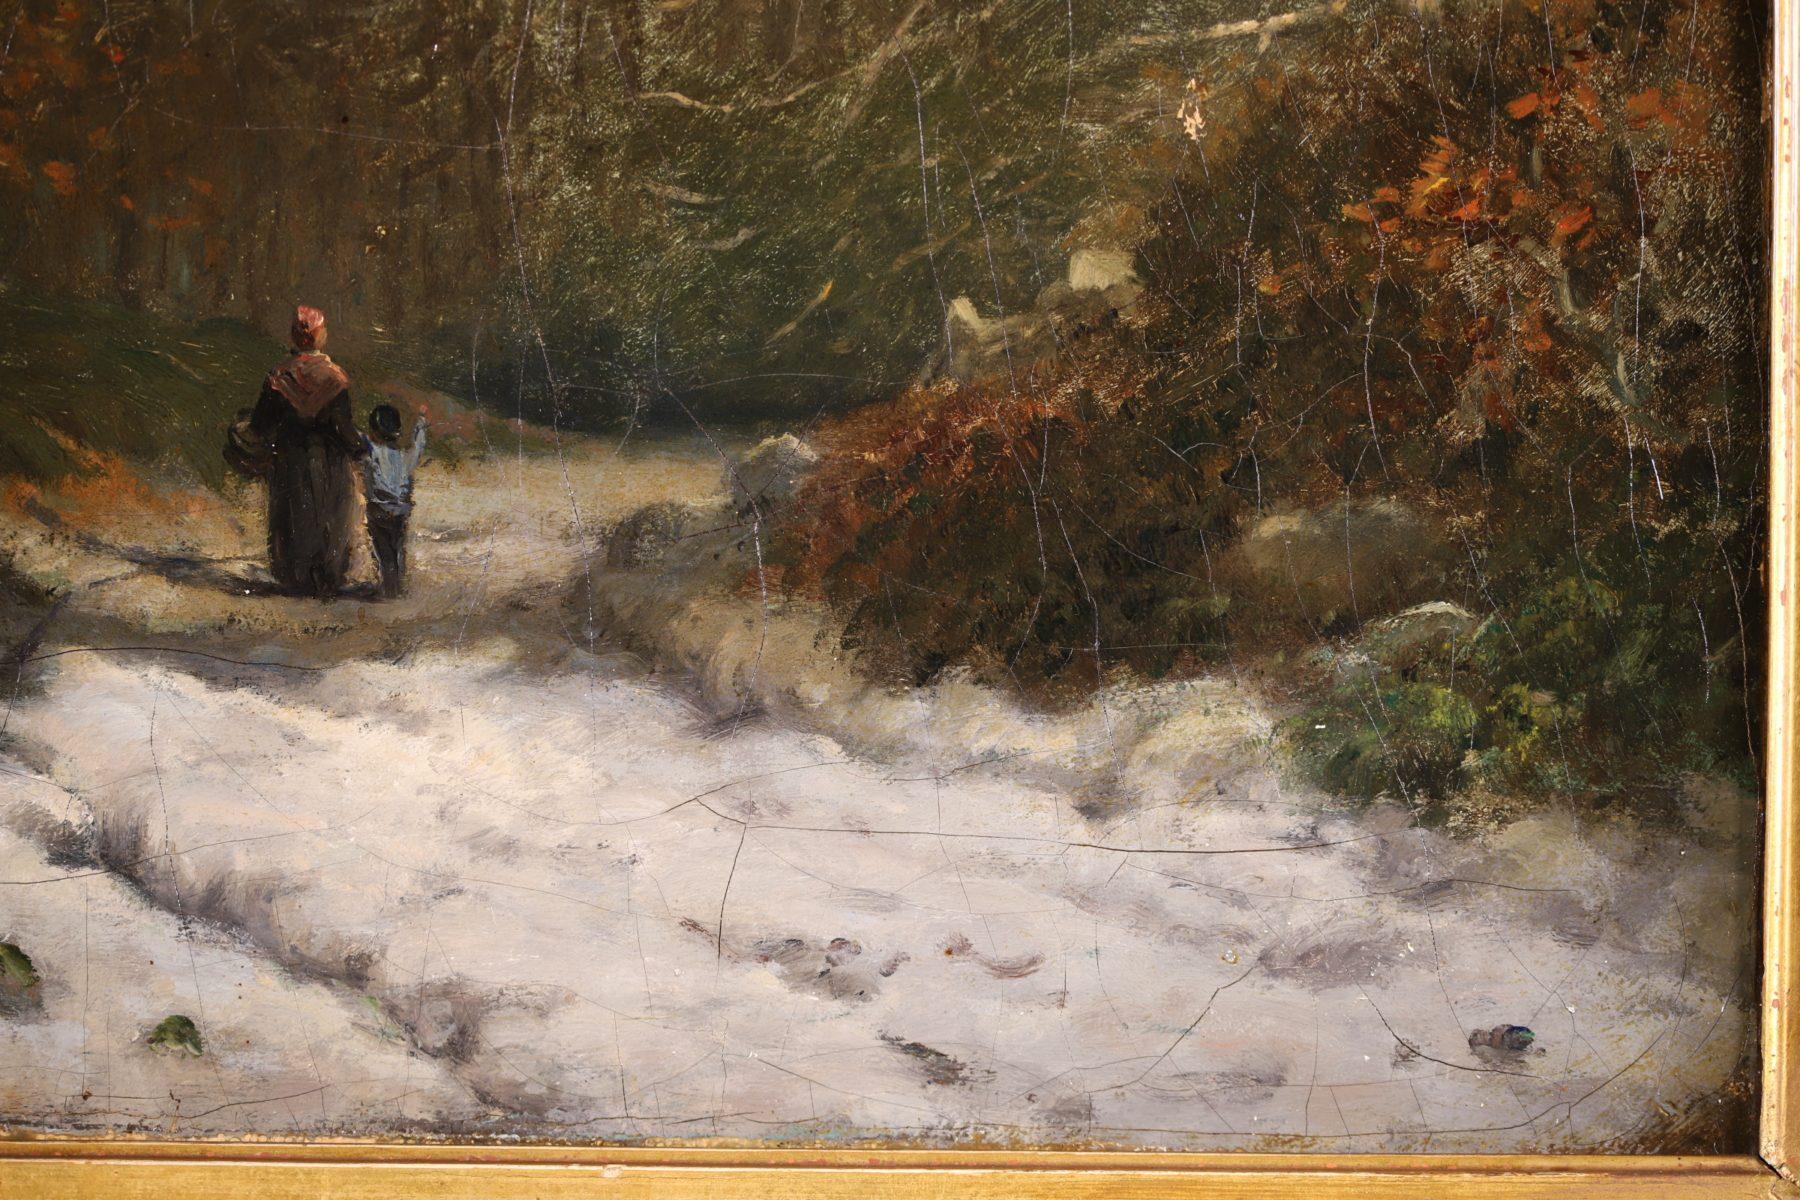 Winter - Fontainbleau Forest - Impressionist Oil, Landscape by Victor Vignon - Brown Landscape Painting by Victor Alfred Paul Vignon